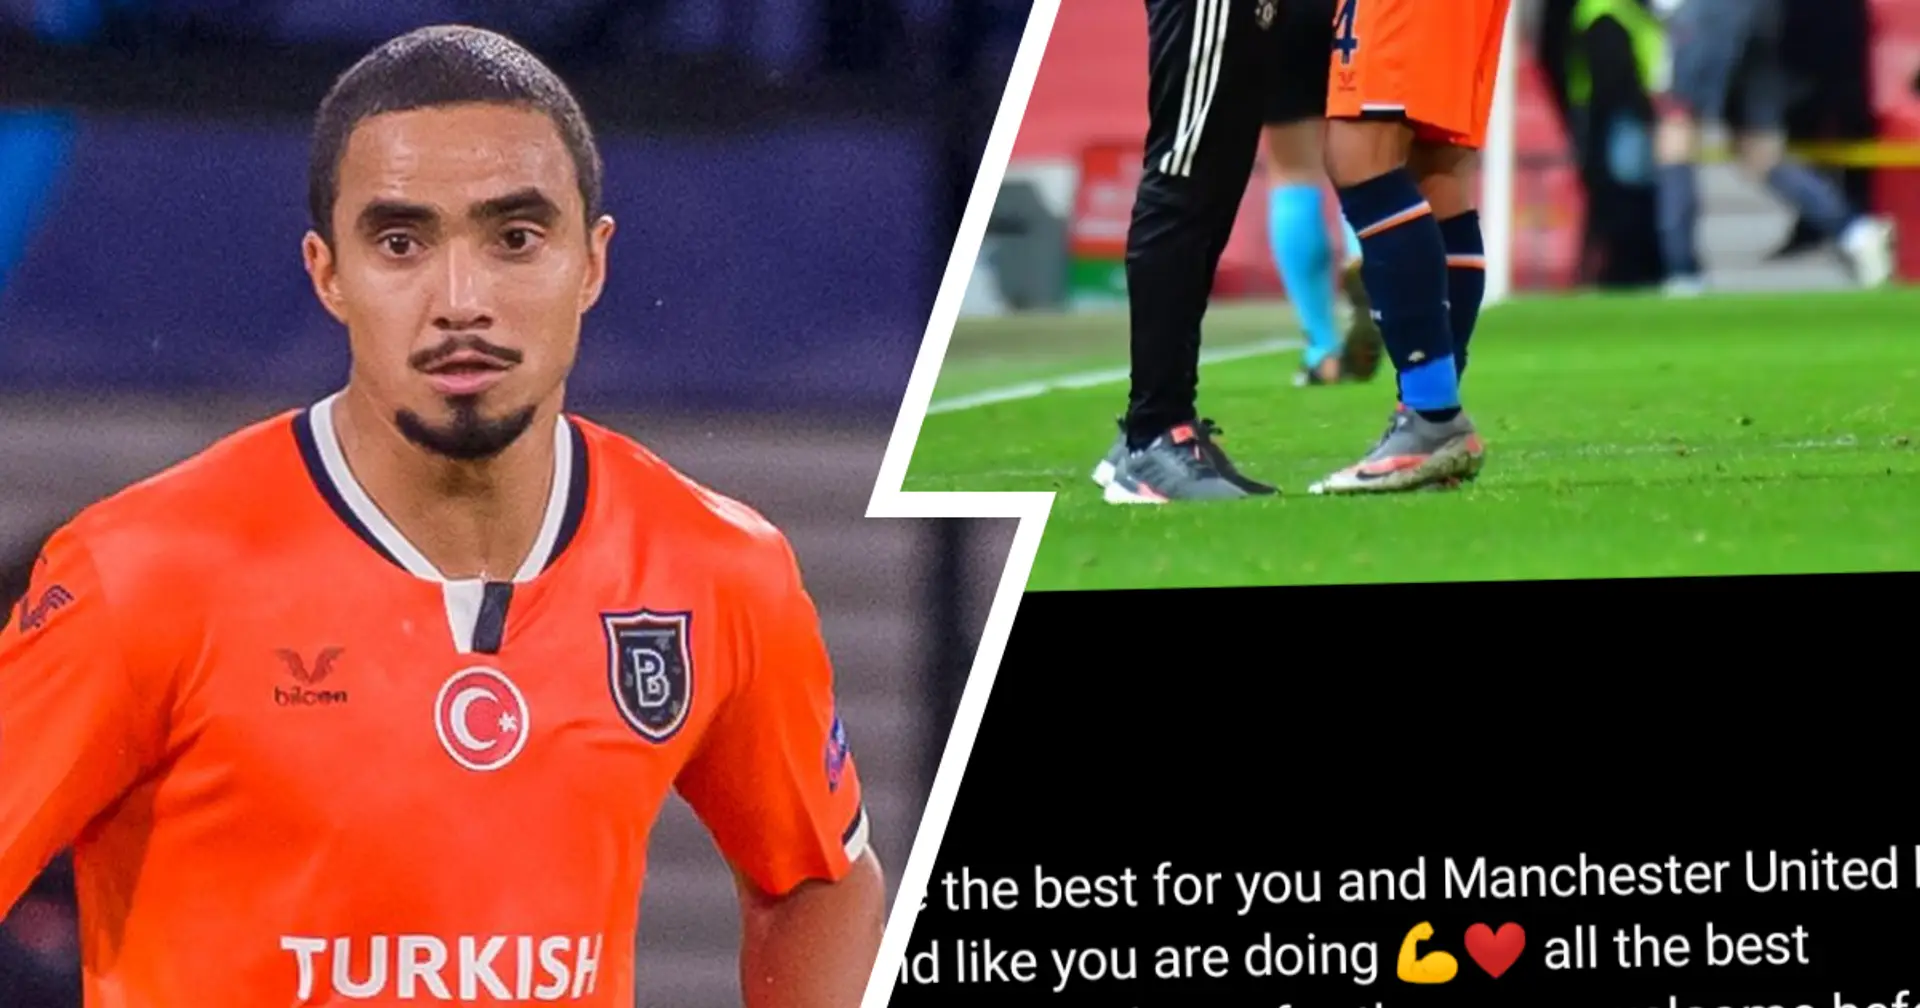 Rafael shares endearing message for Solskjaer following Old Trafford return